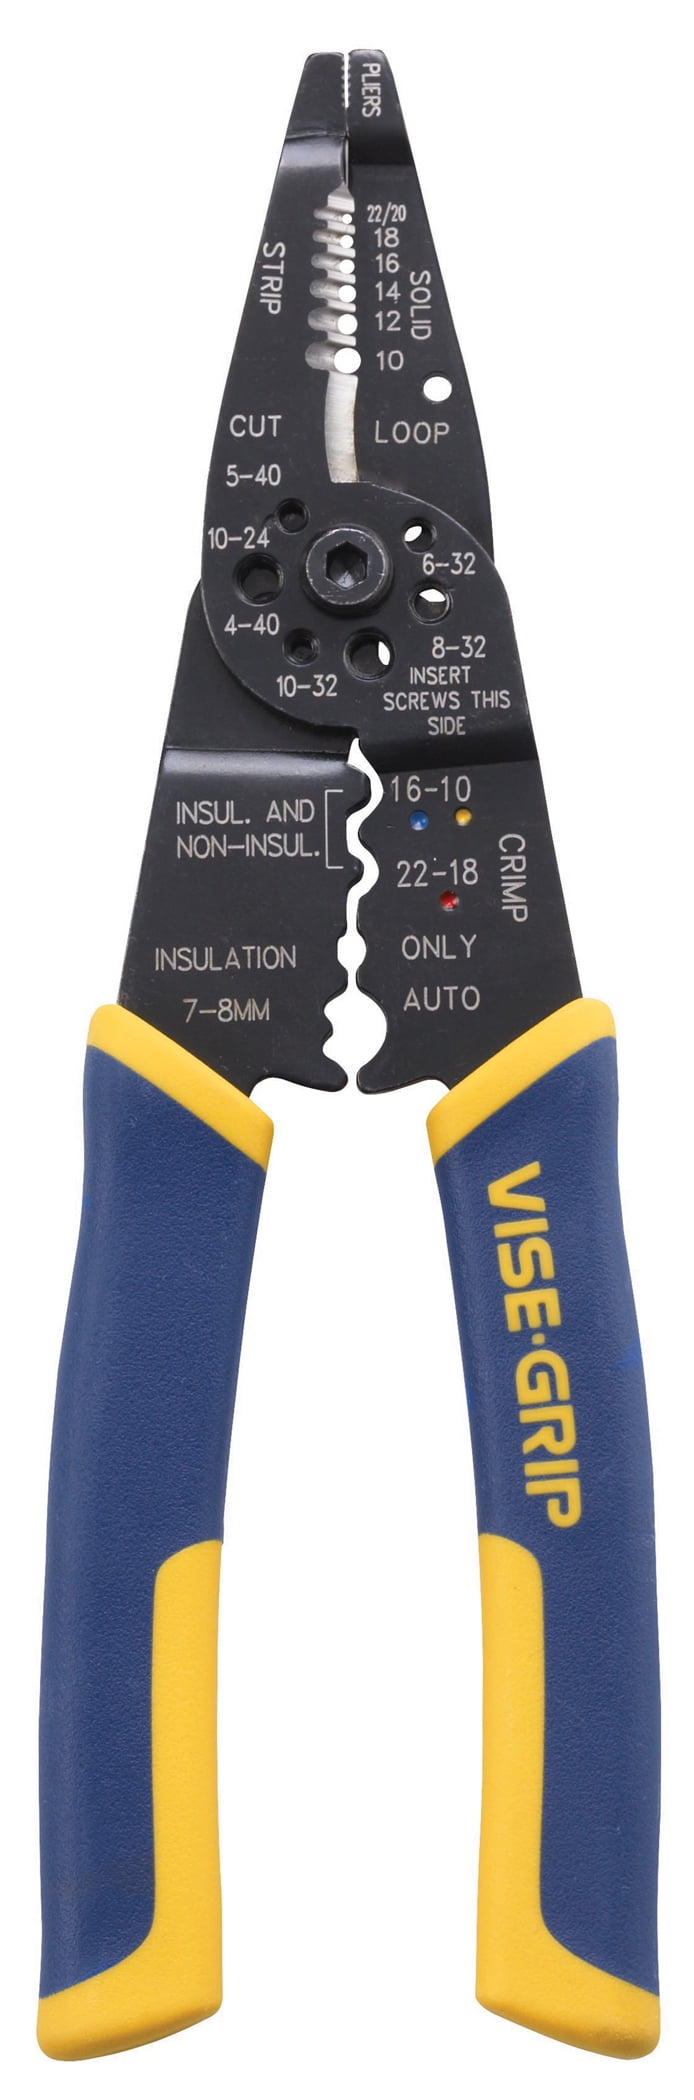 Vise-Grip Wire Stripper 8-Inch Self-Adjusting 